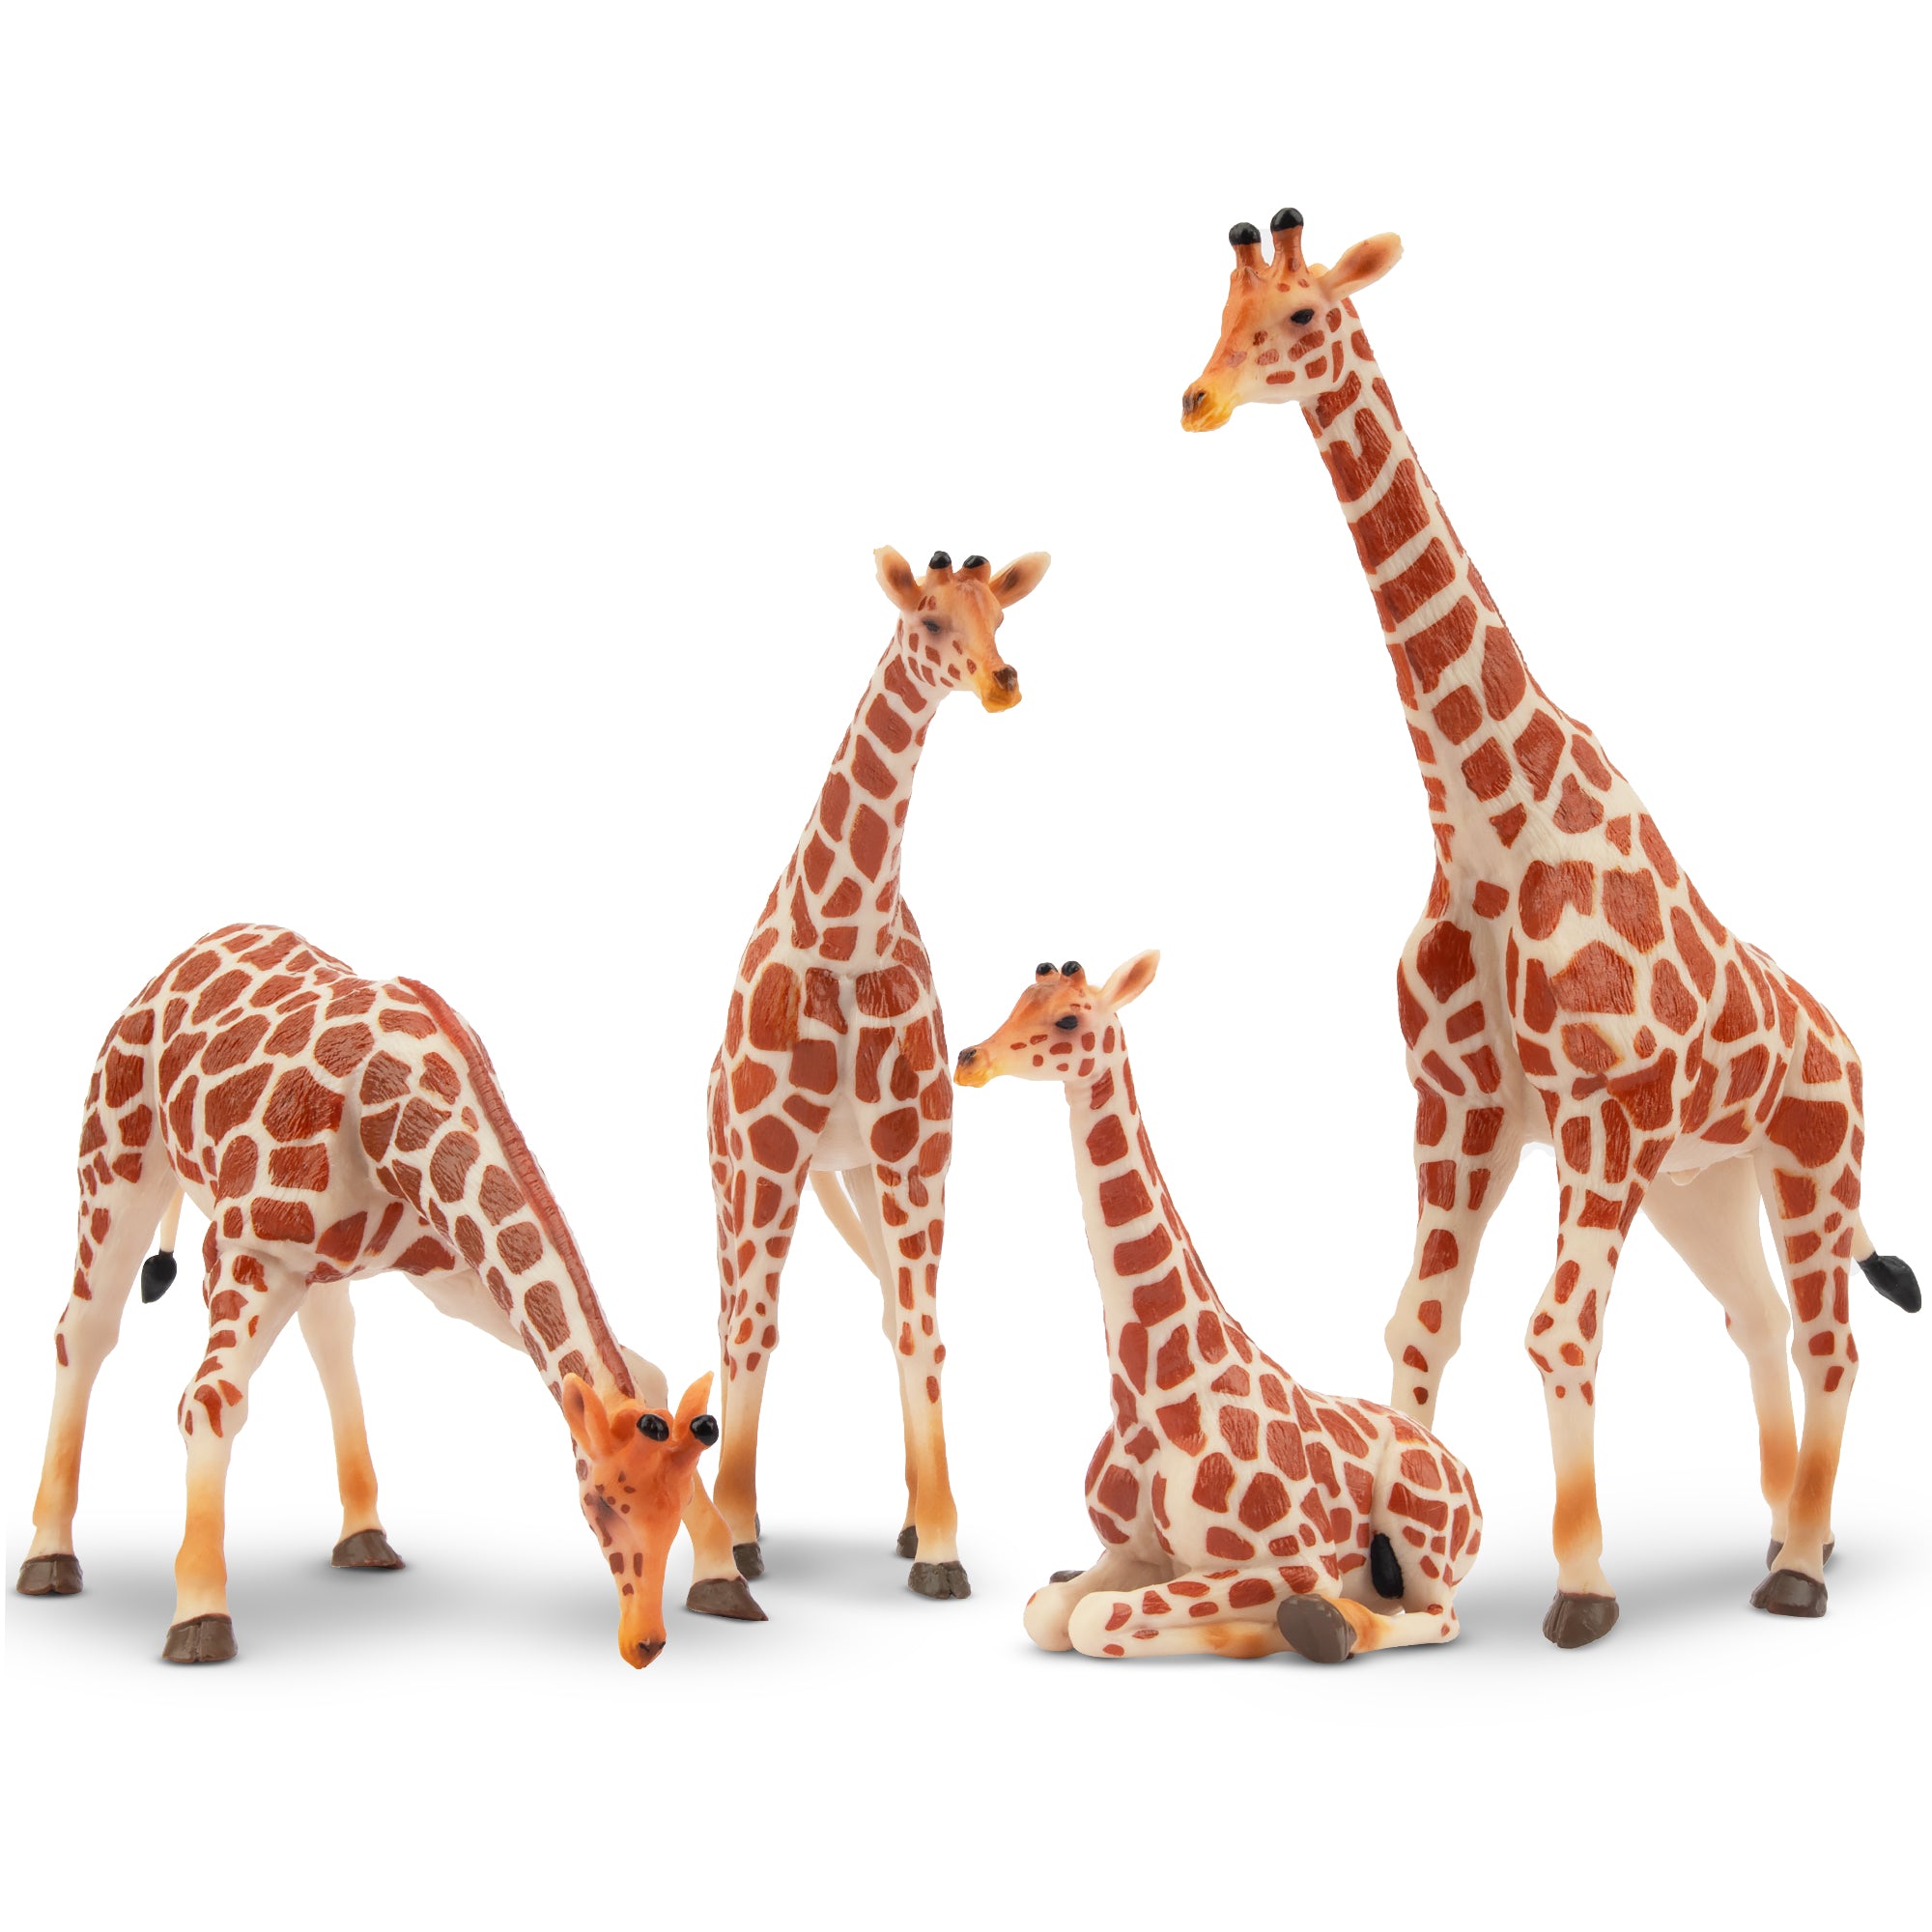 4-Piece Giraffe Family Figurines Playset with Adult & Baby Giraffes-2